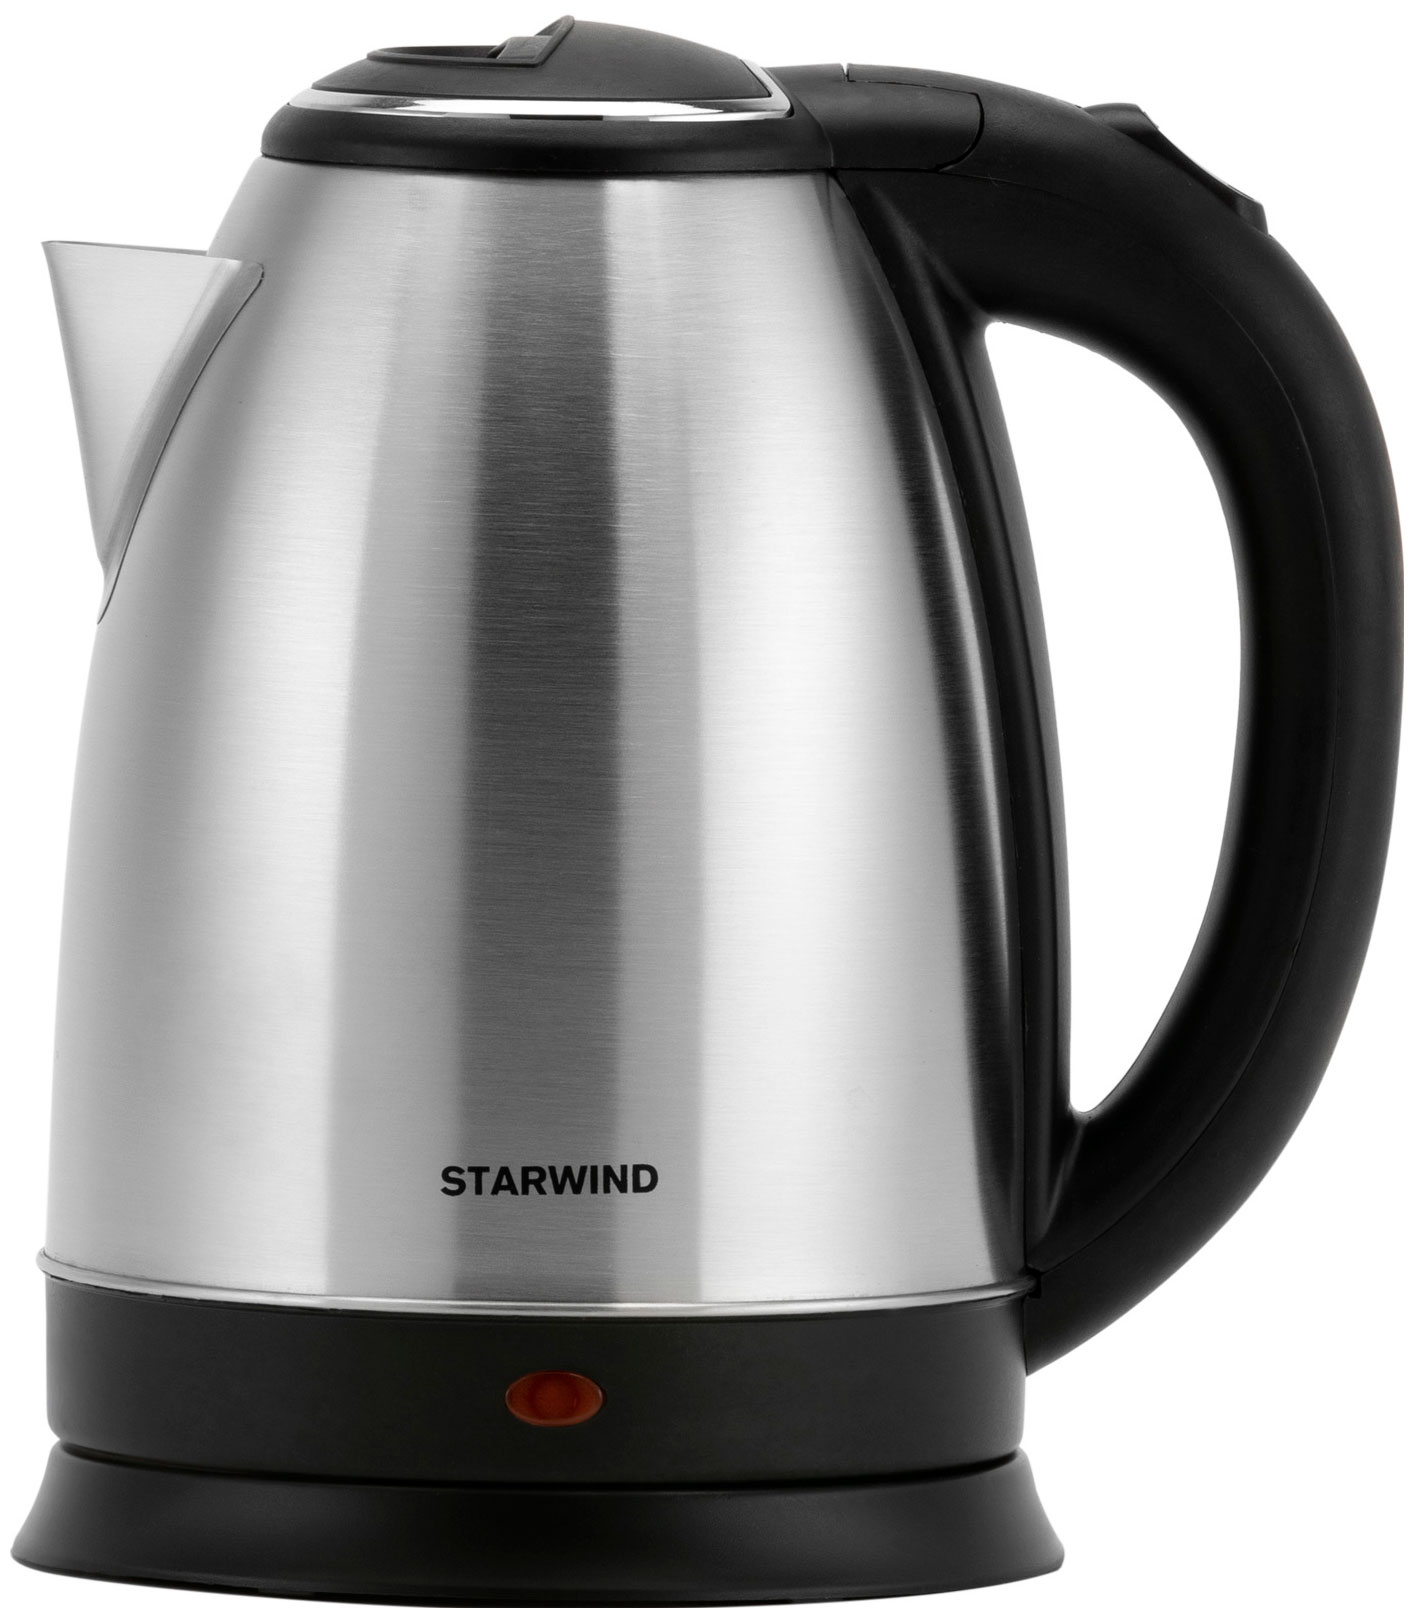 чайник электрический starwind sks1051 1500вт серебристый матовый и черный Чайник электрический Starwind SKS1051 серебристый матовый/черный